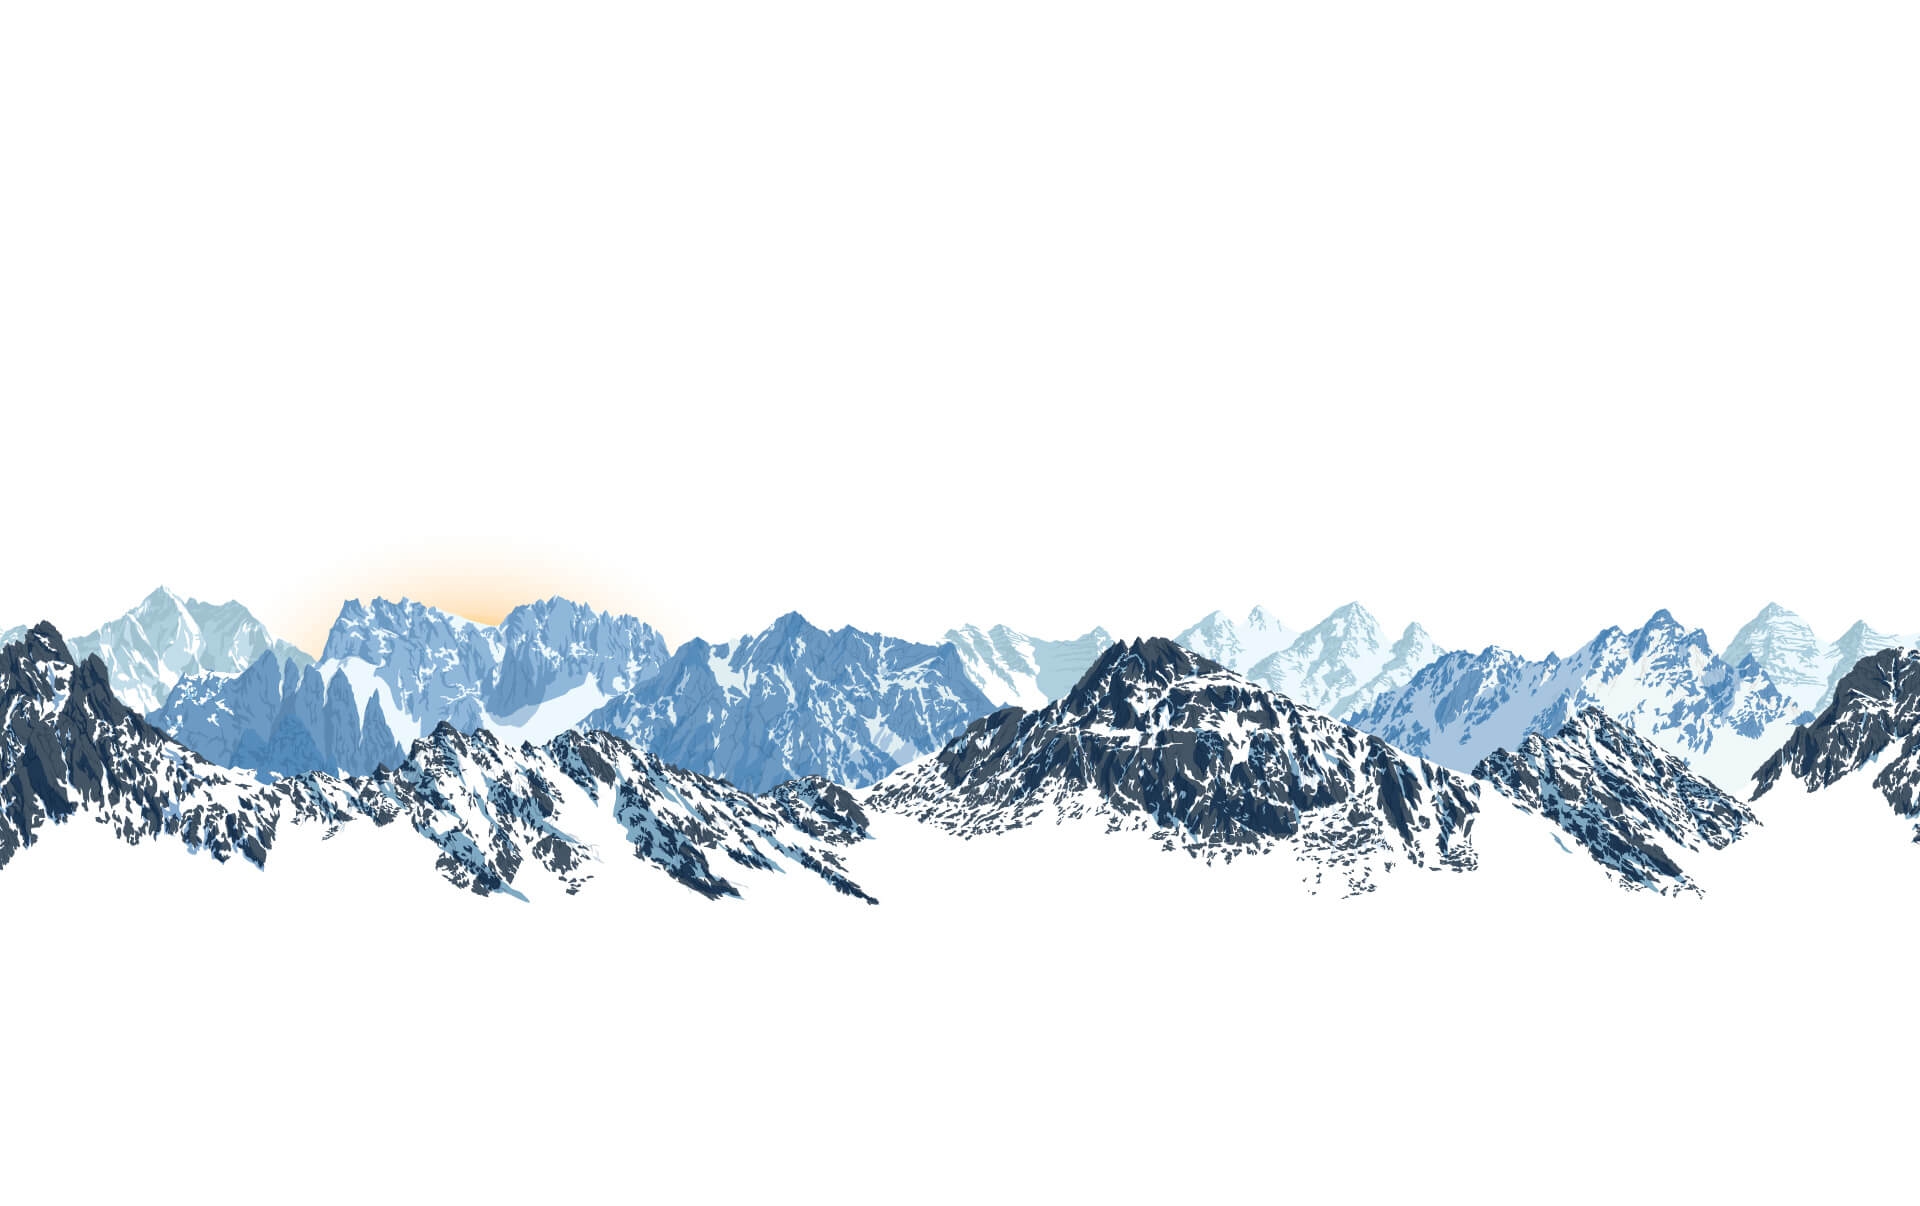 Illustration of a snowy mountain range